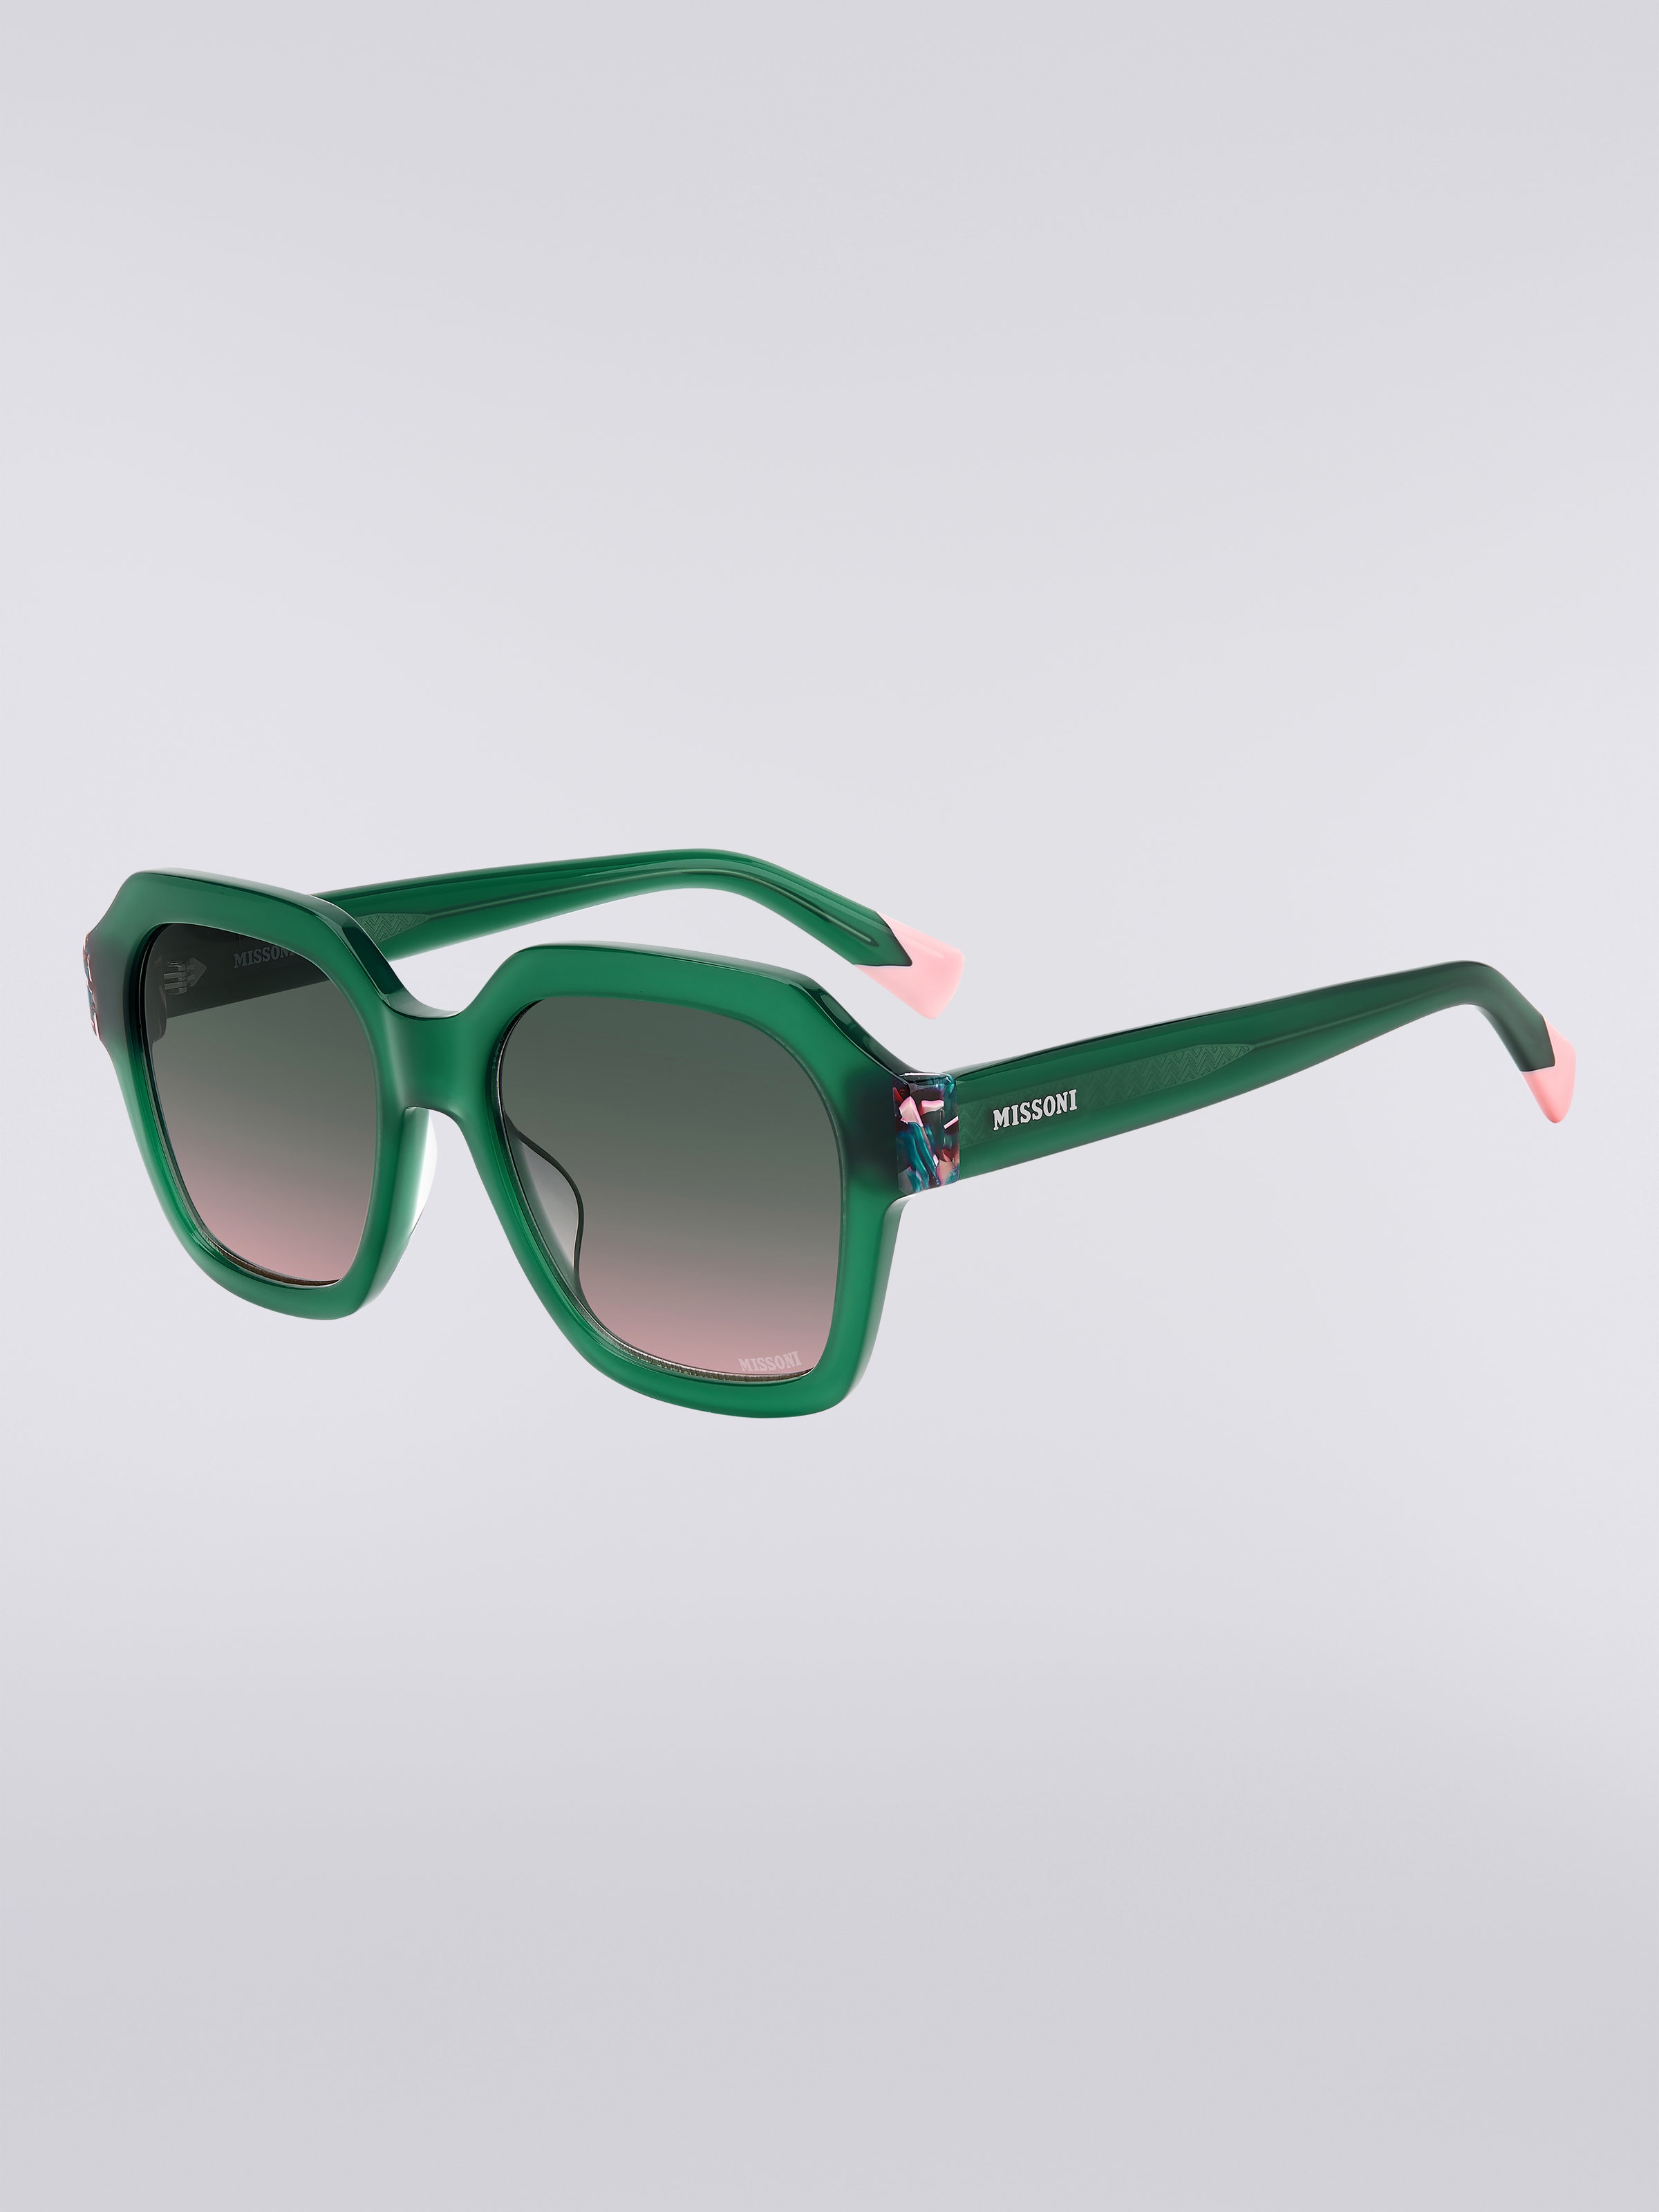 Missoni Seasonal Acetate Sunglasses, Green & Pink - 1